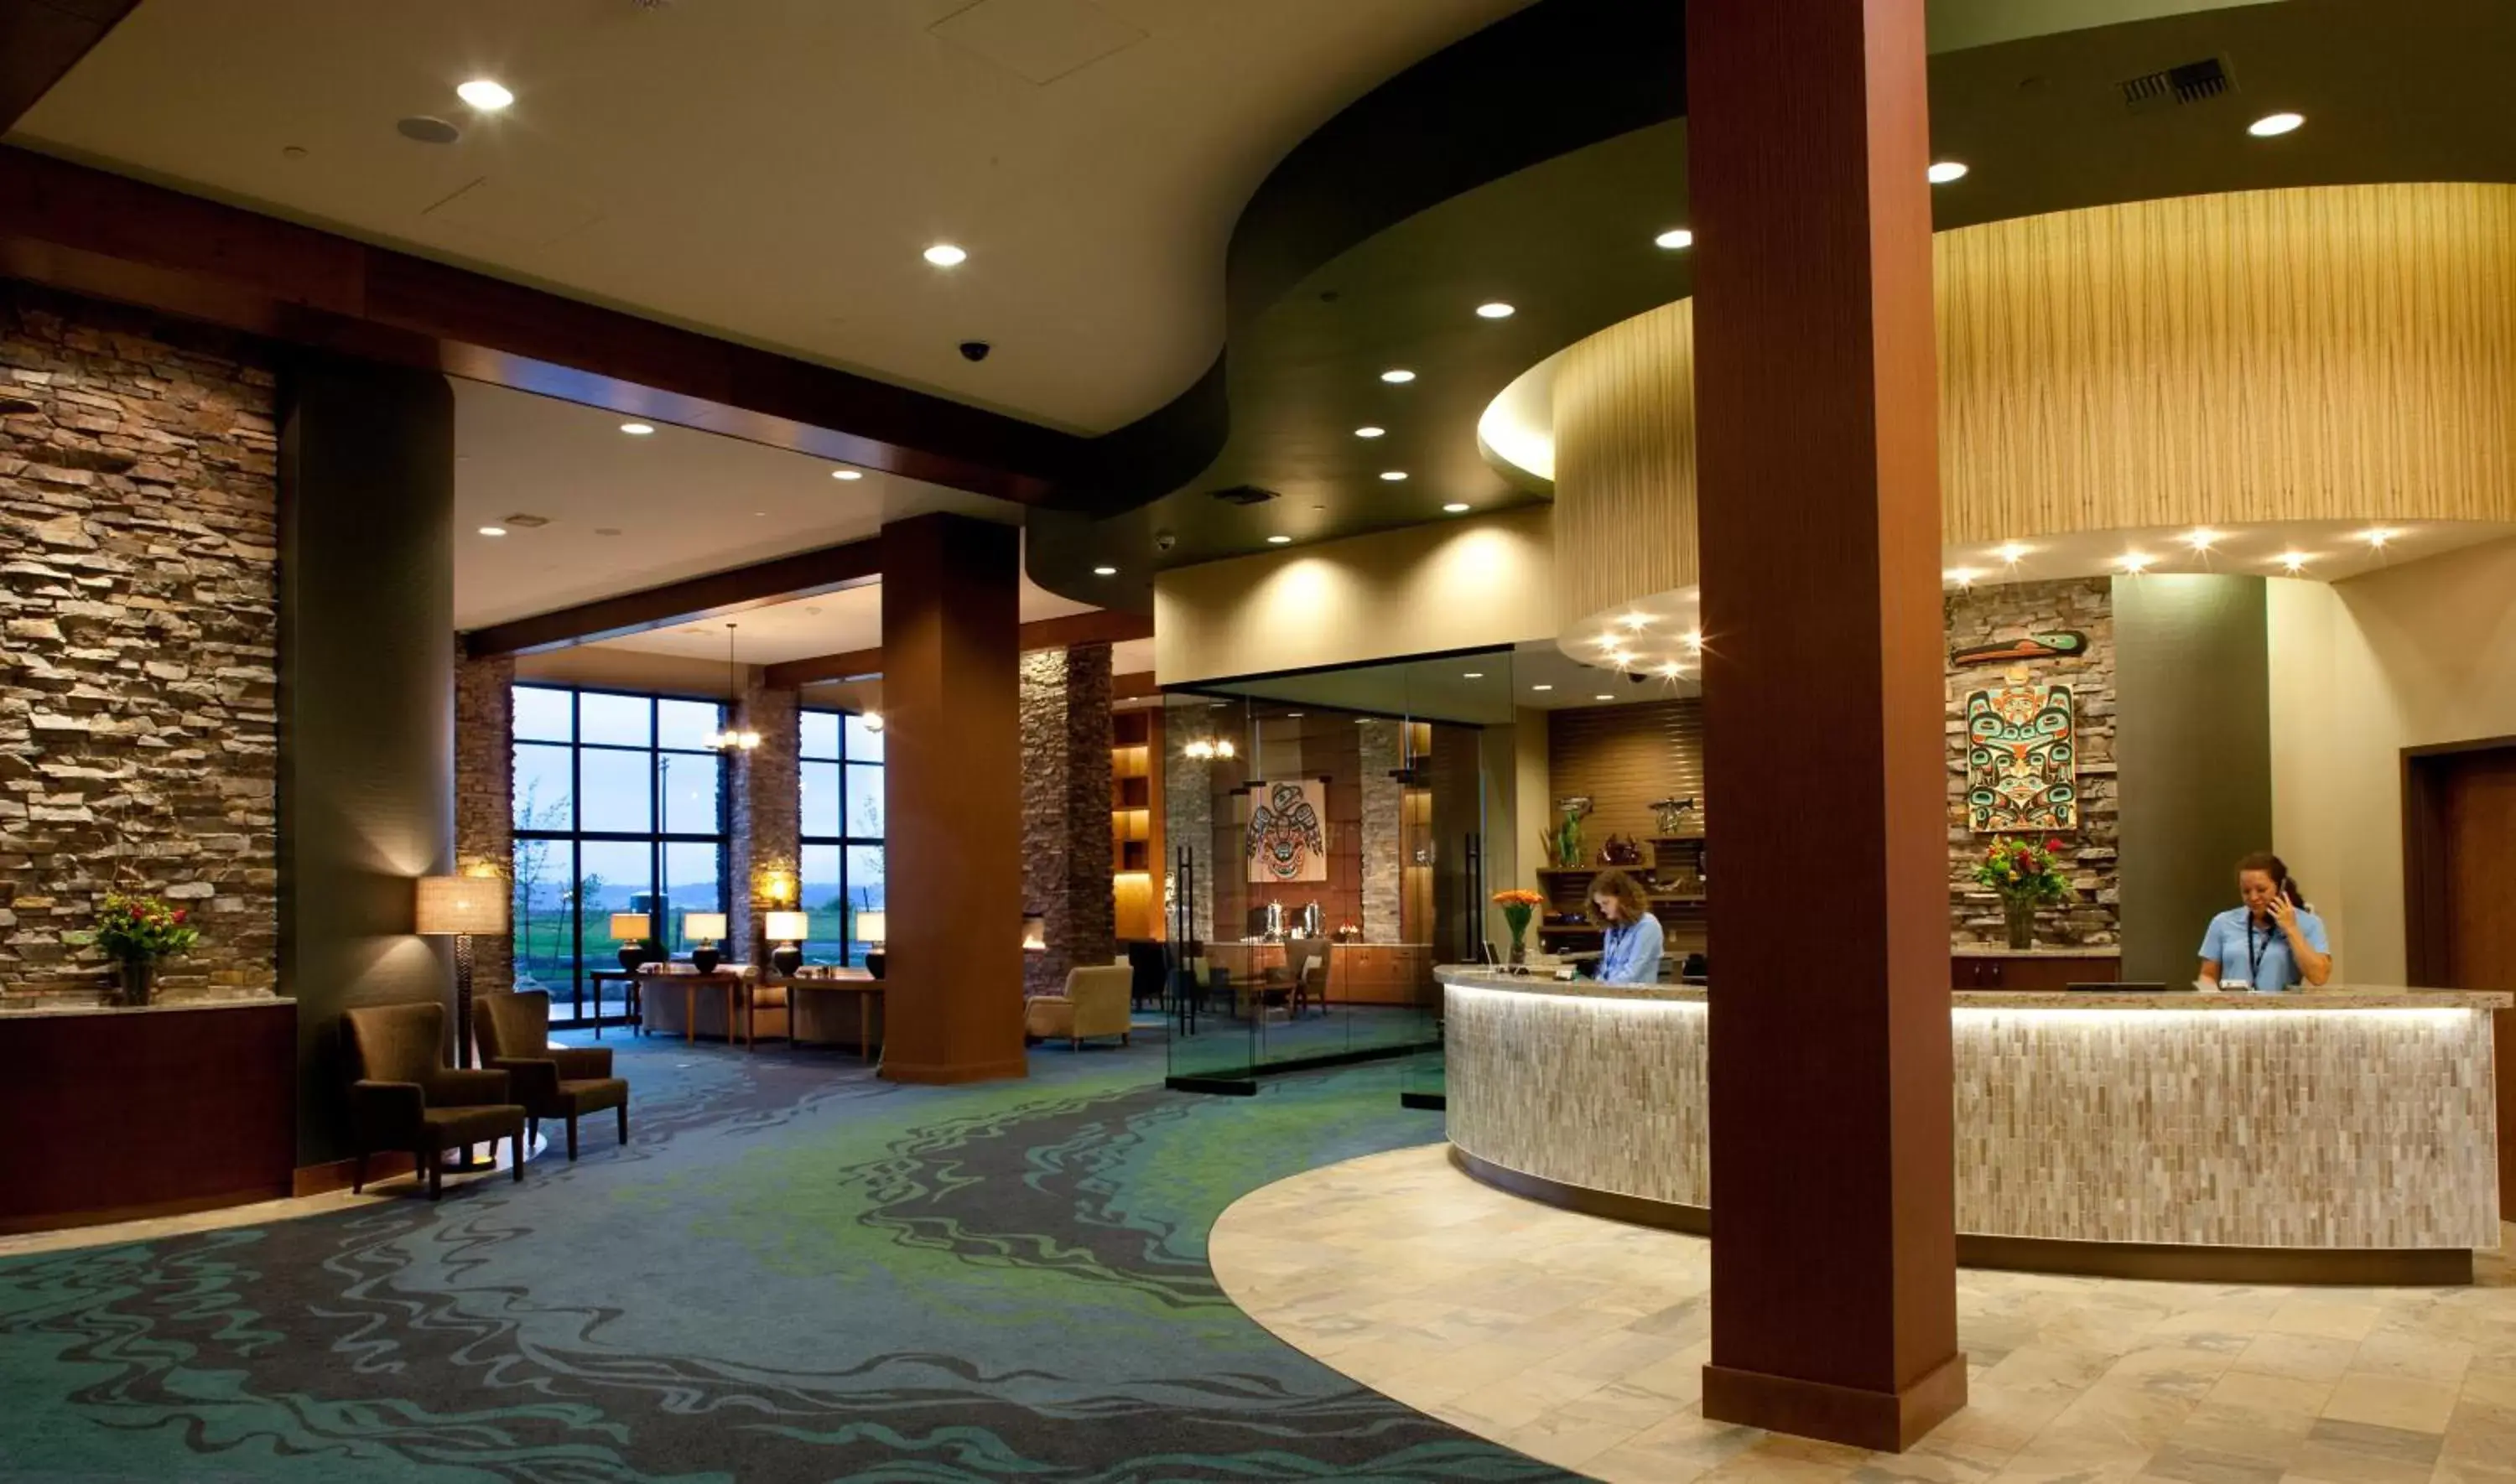 Lobby or reception, Lobby/Reception in Swinomish Casino & Lodge